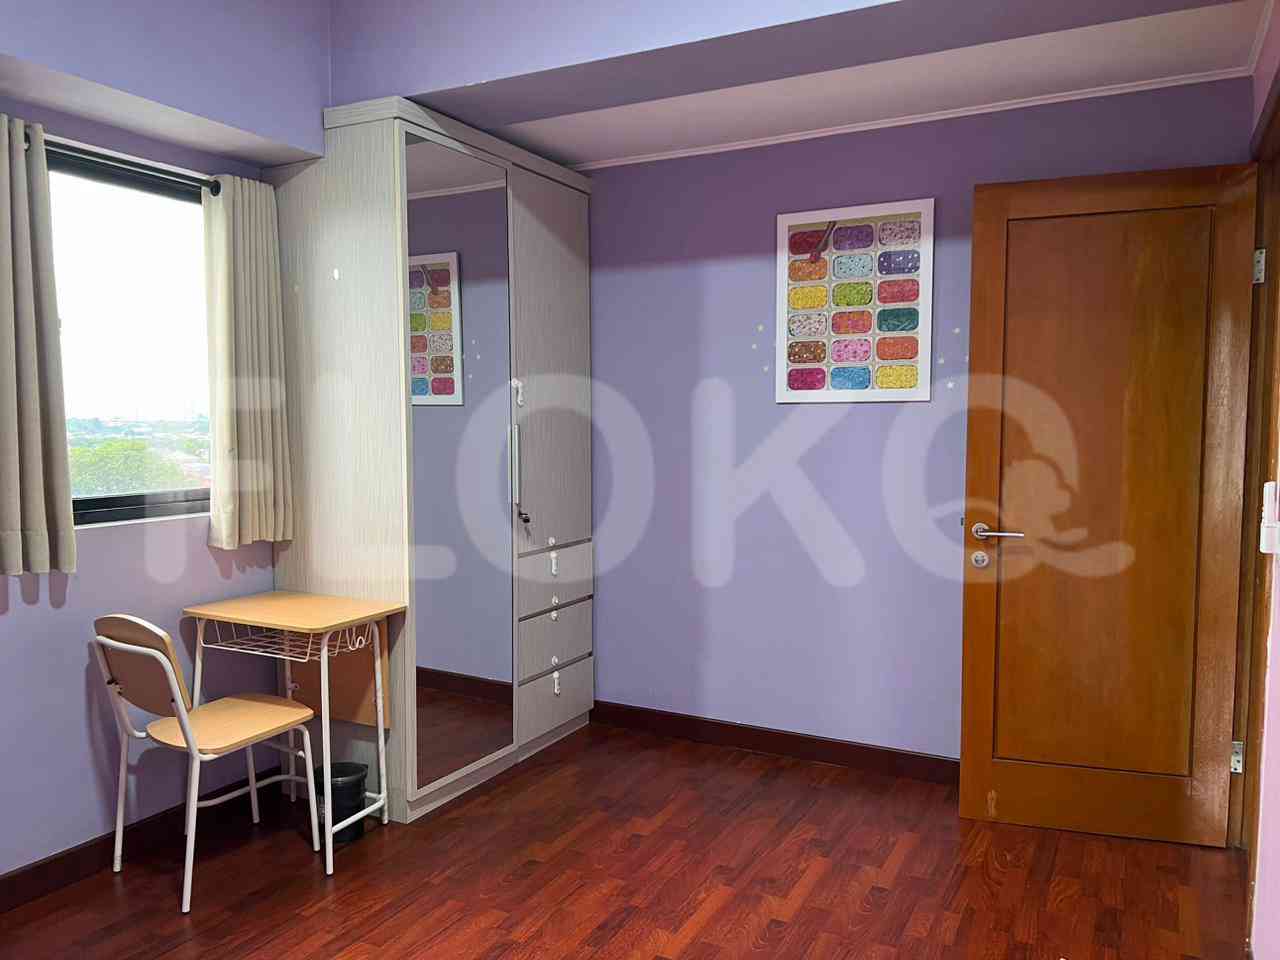 3 Bedroom on 10th Floor for Rent in BonaVista Apartment - fled92 4